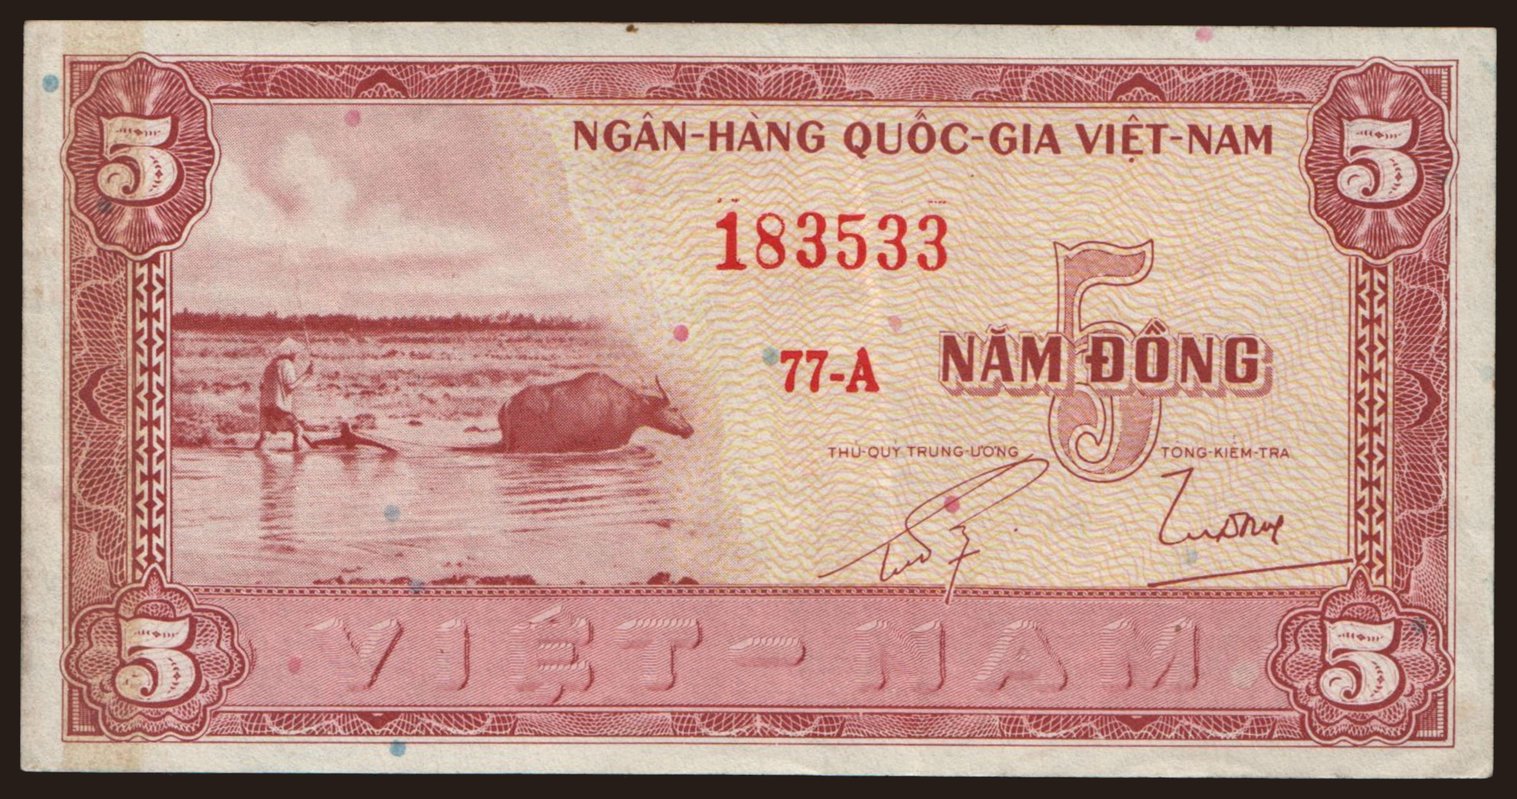 5 dong, 1955